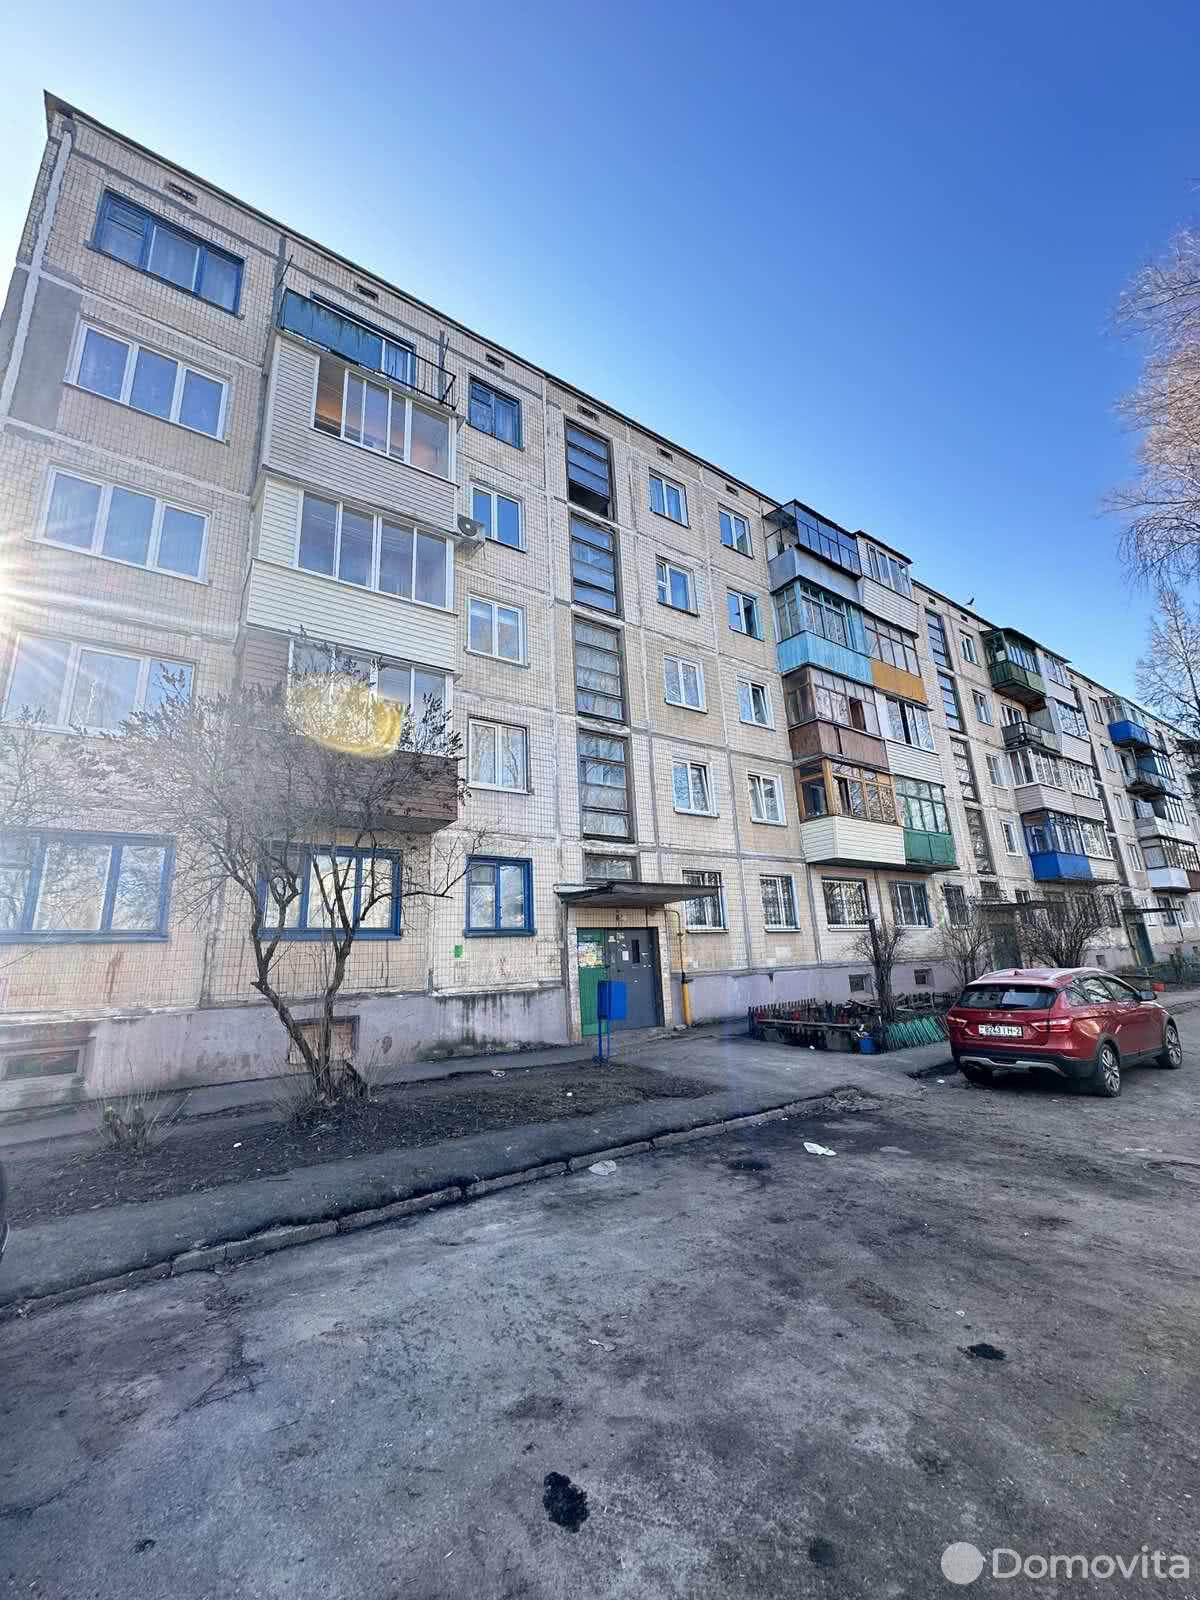 квартира, Витебск, ул. Вострецова, д. 9/2, стоимость продажи 102 662 р.